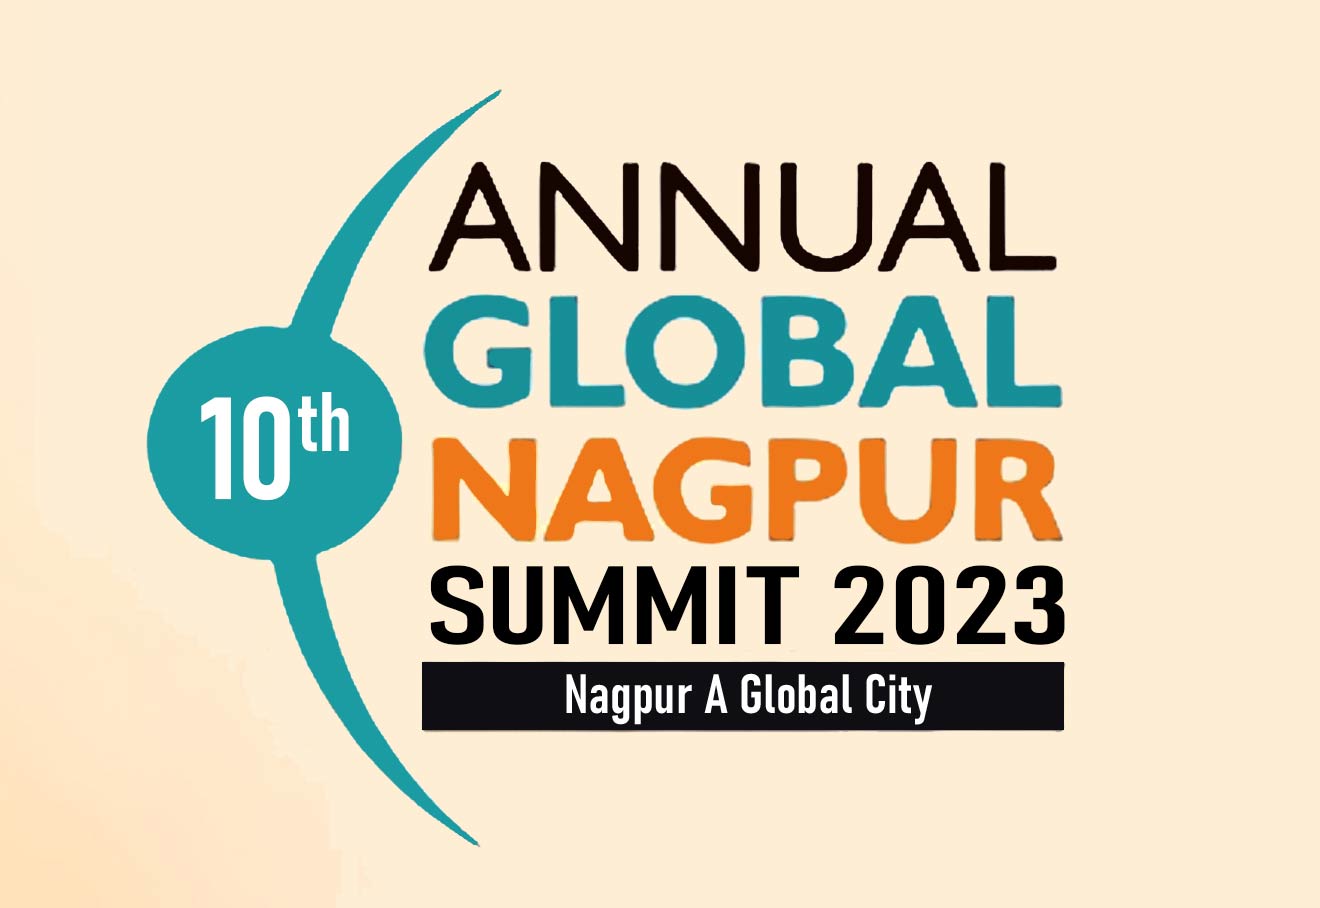 Global Nagpur Summit To Be Held On Dec 9-10